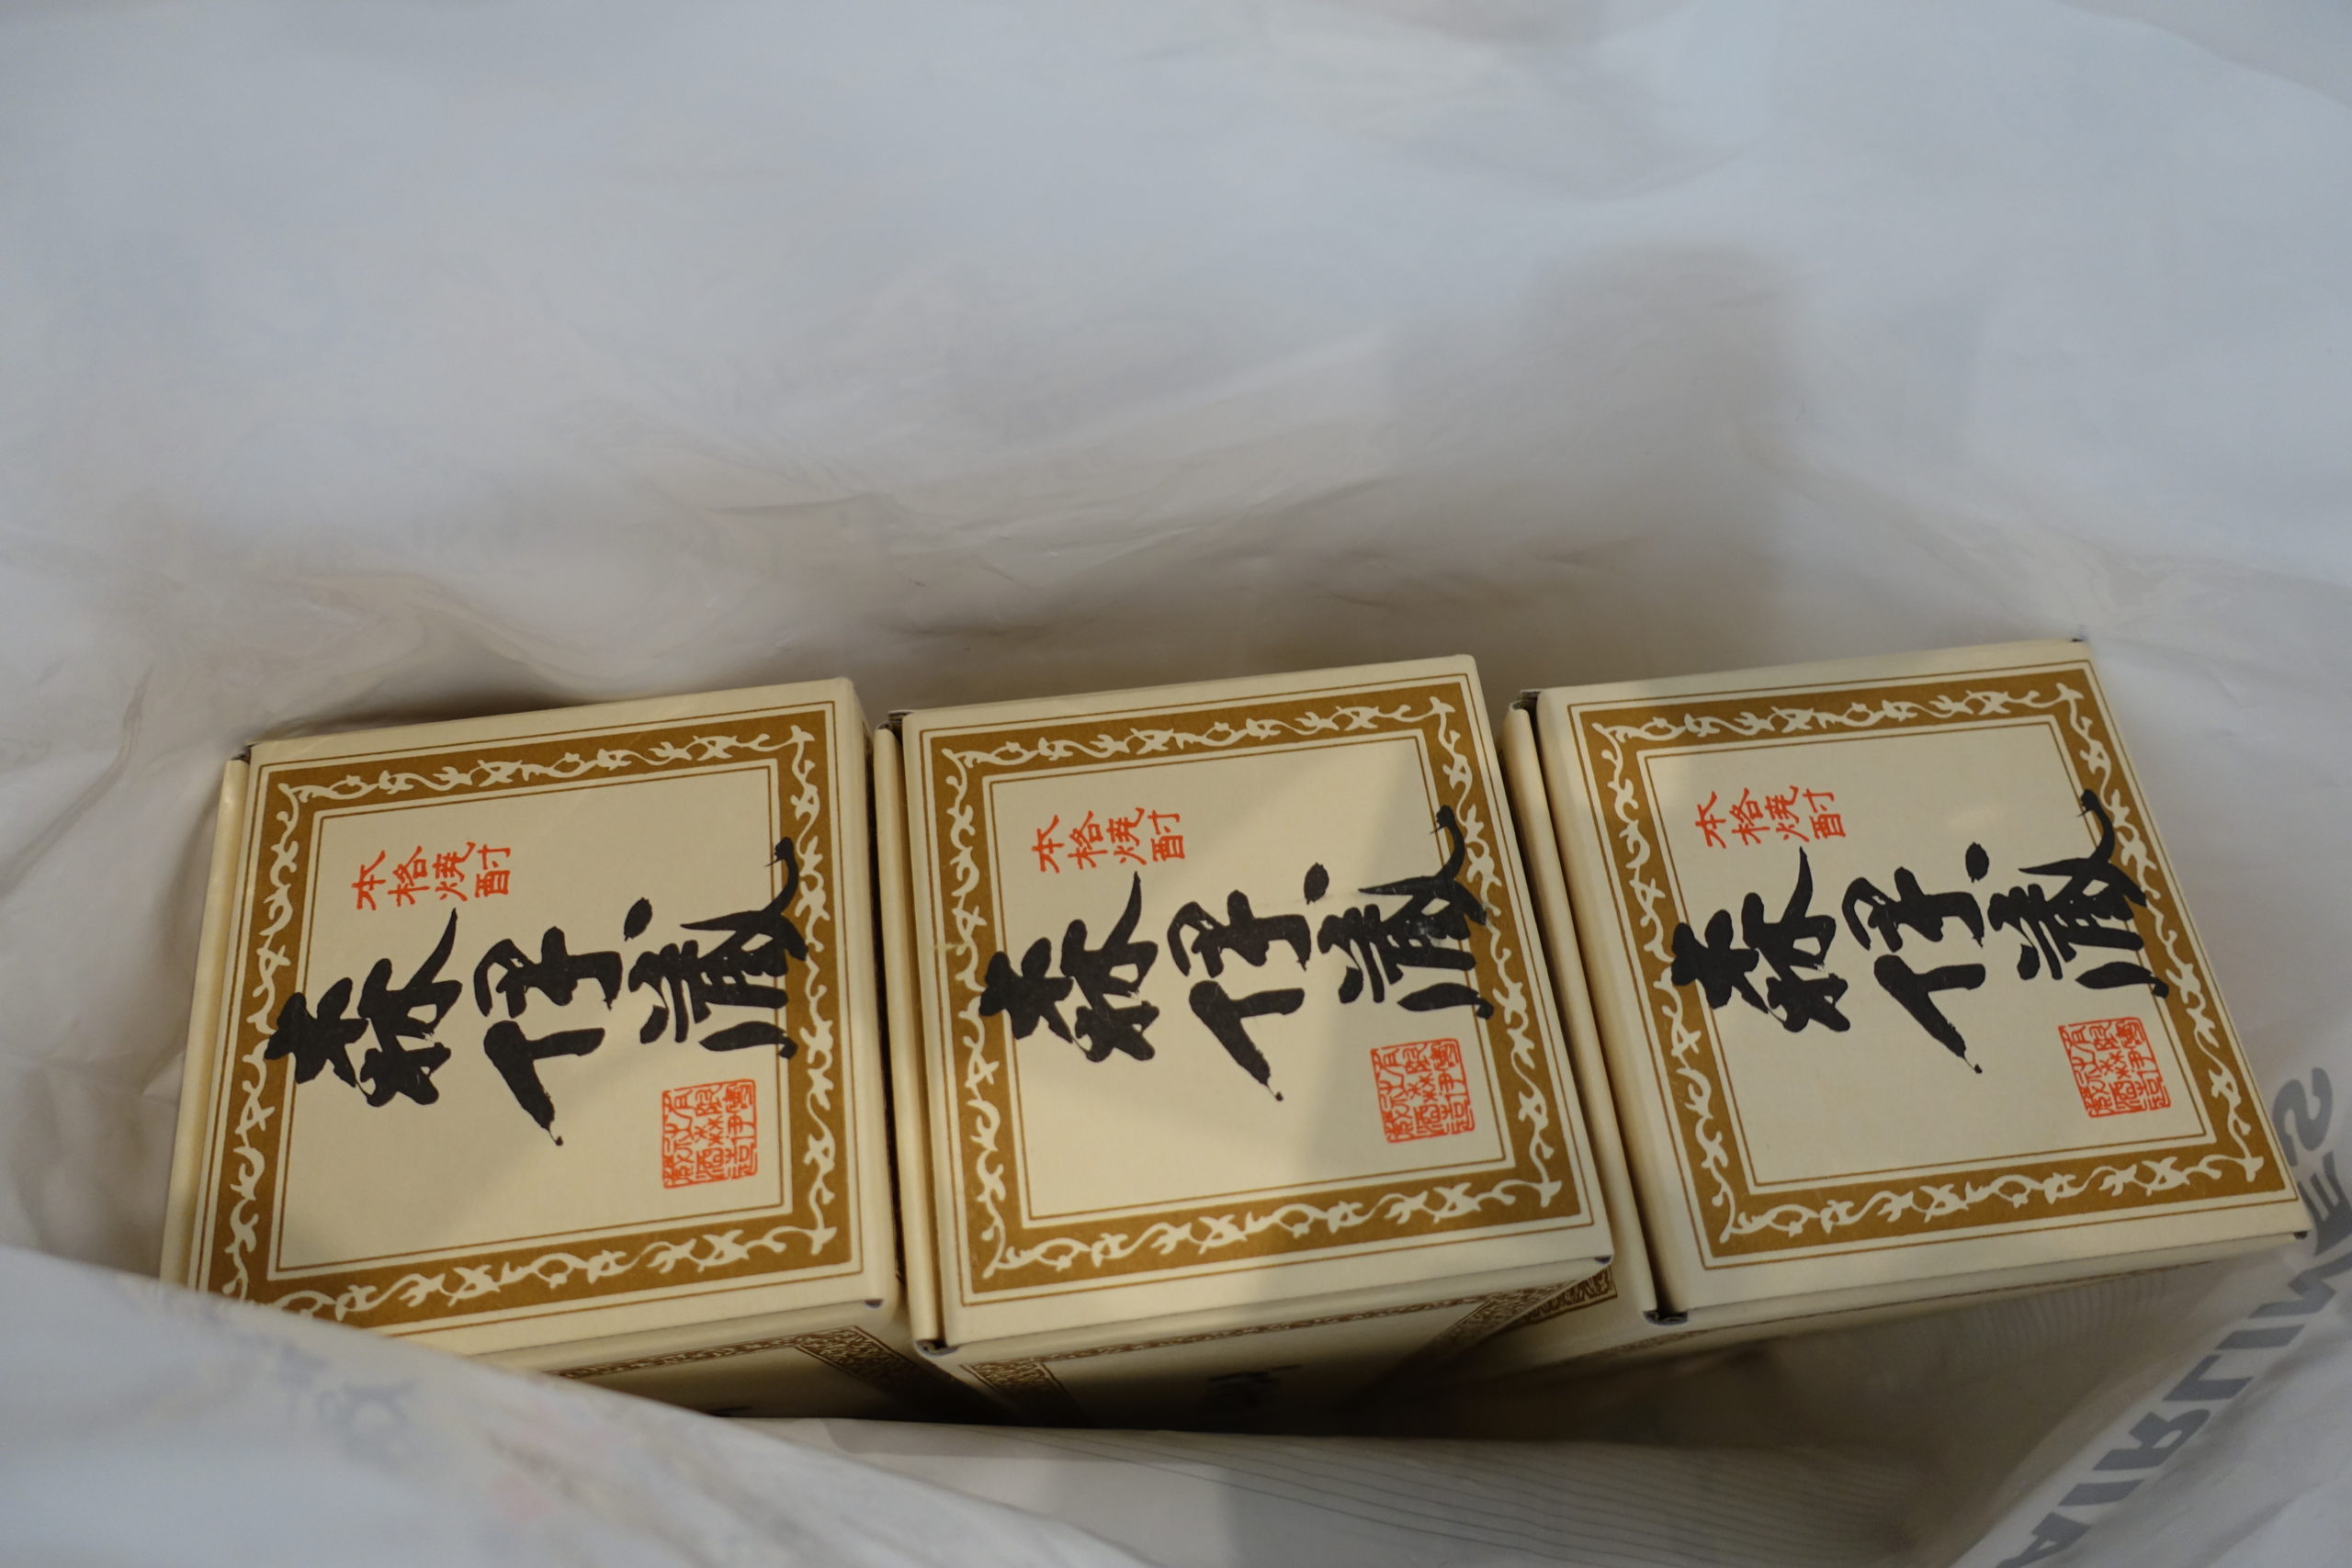 JAL 国際線 機内販売 幻の焼酎森伊蔵の定価での購入方法 | 旅の図書館 